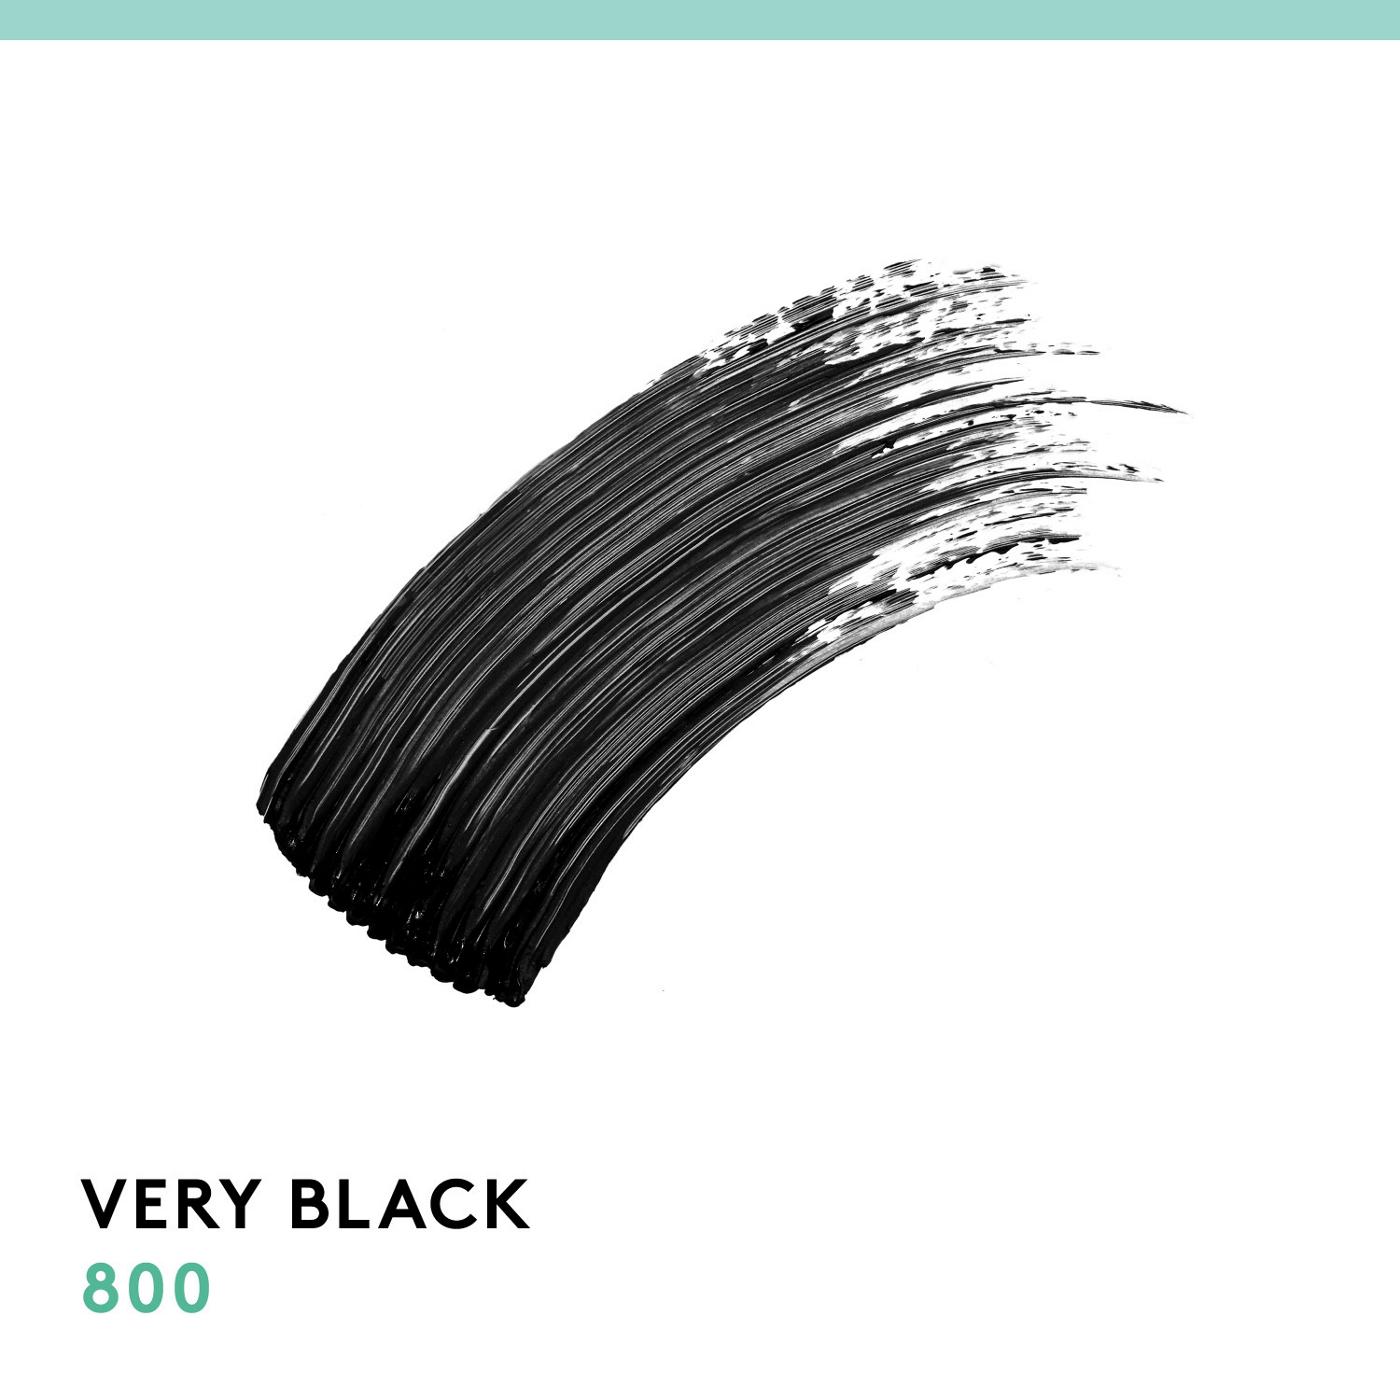 Covergirl Lash Blast Clean Mascara 800 Very Black; image 9 of 11